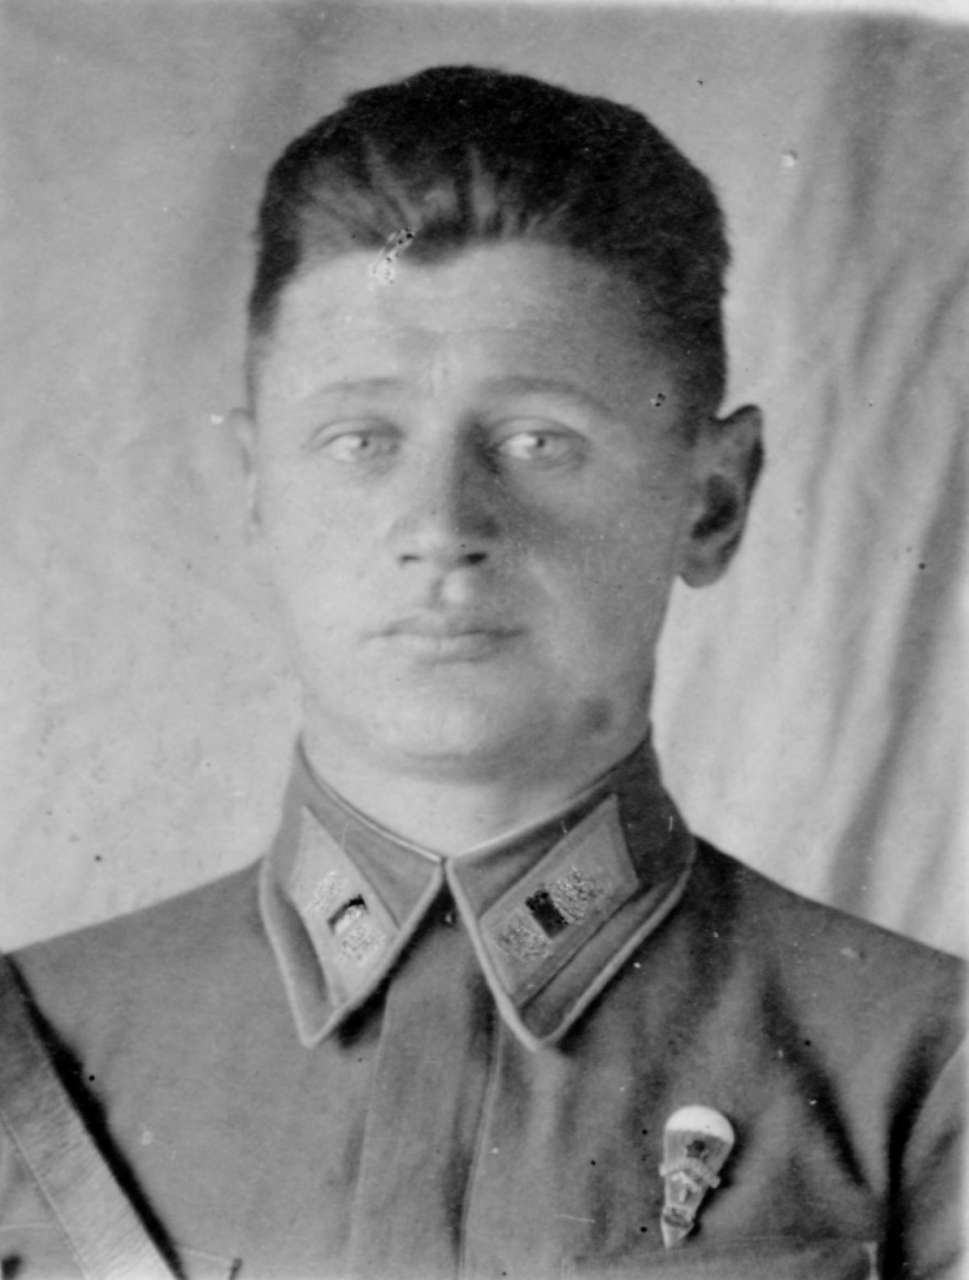 Капитан Вдовин Андрей Дмитриевич, 1907 г.р., командир 4-го батальона 1-й МВДБр